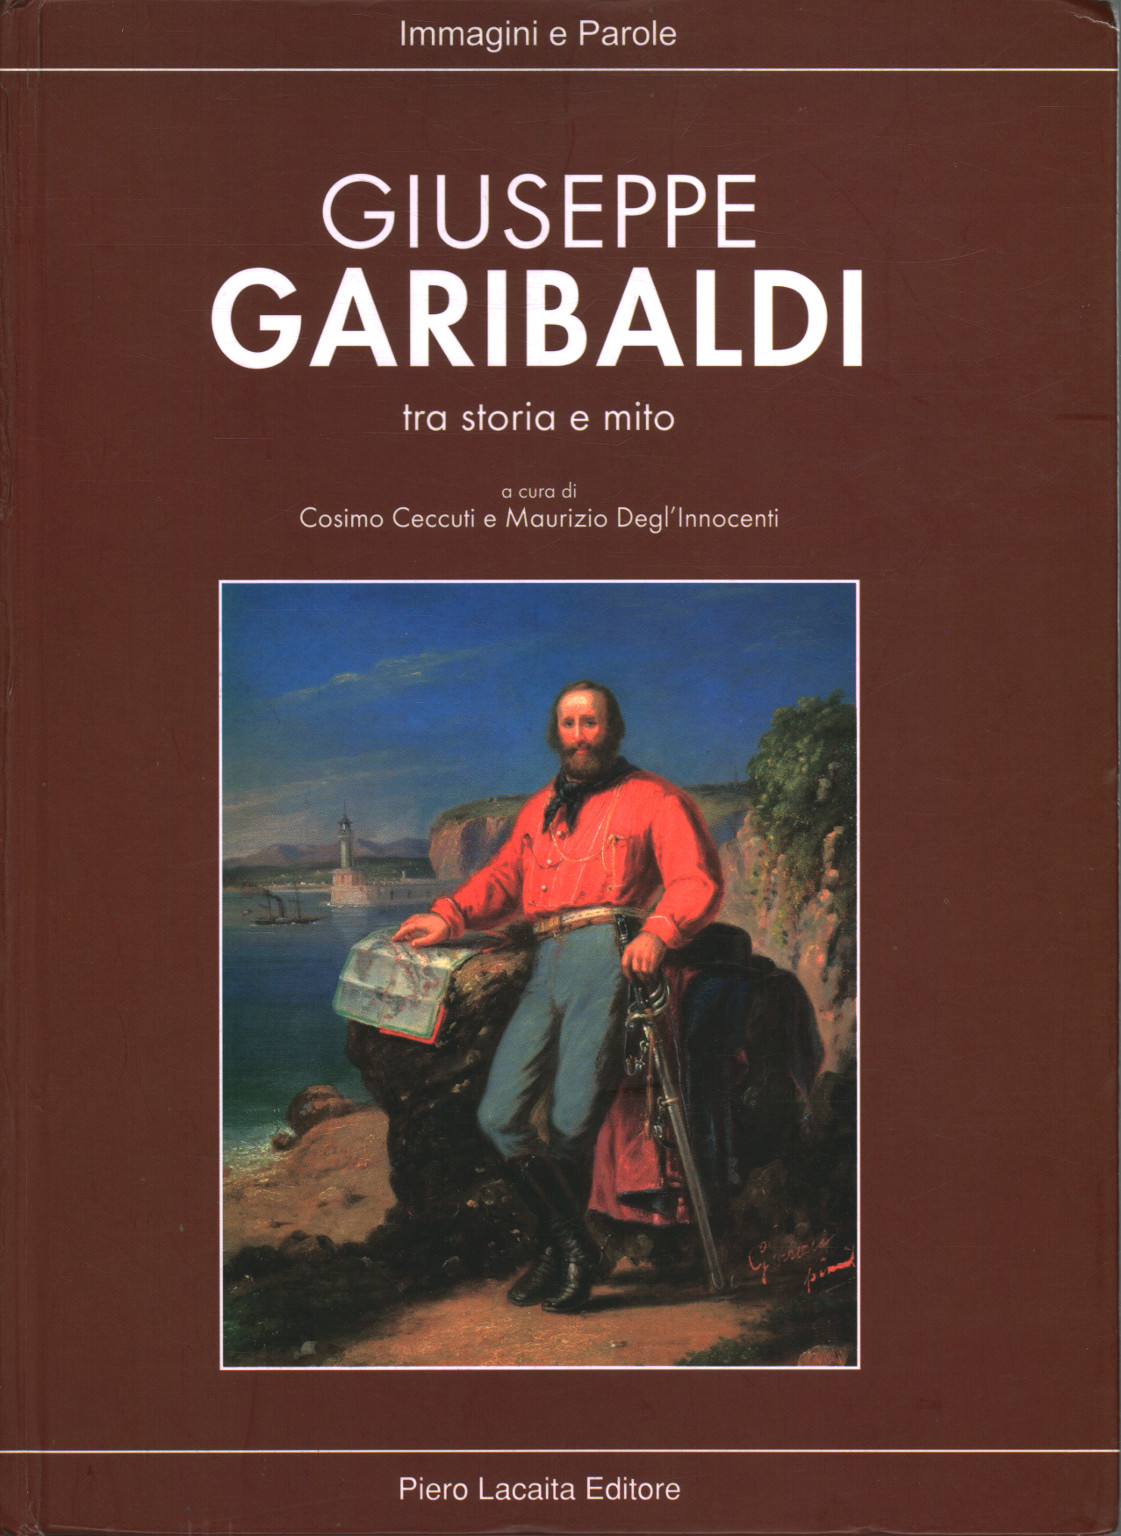 Giuseppe Garibaldi, entre l'histoire et le mythe, s.un.